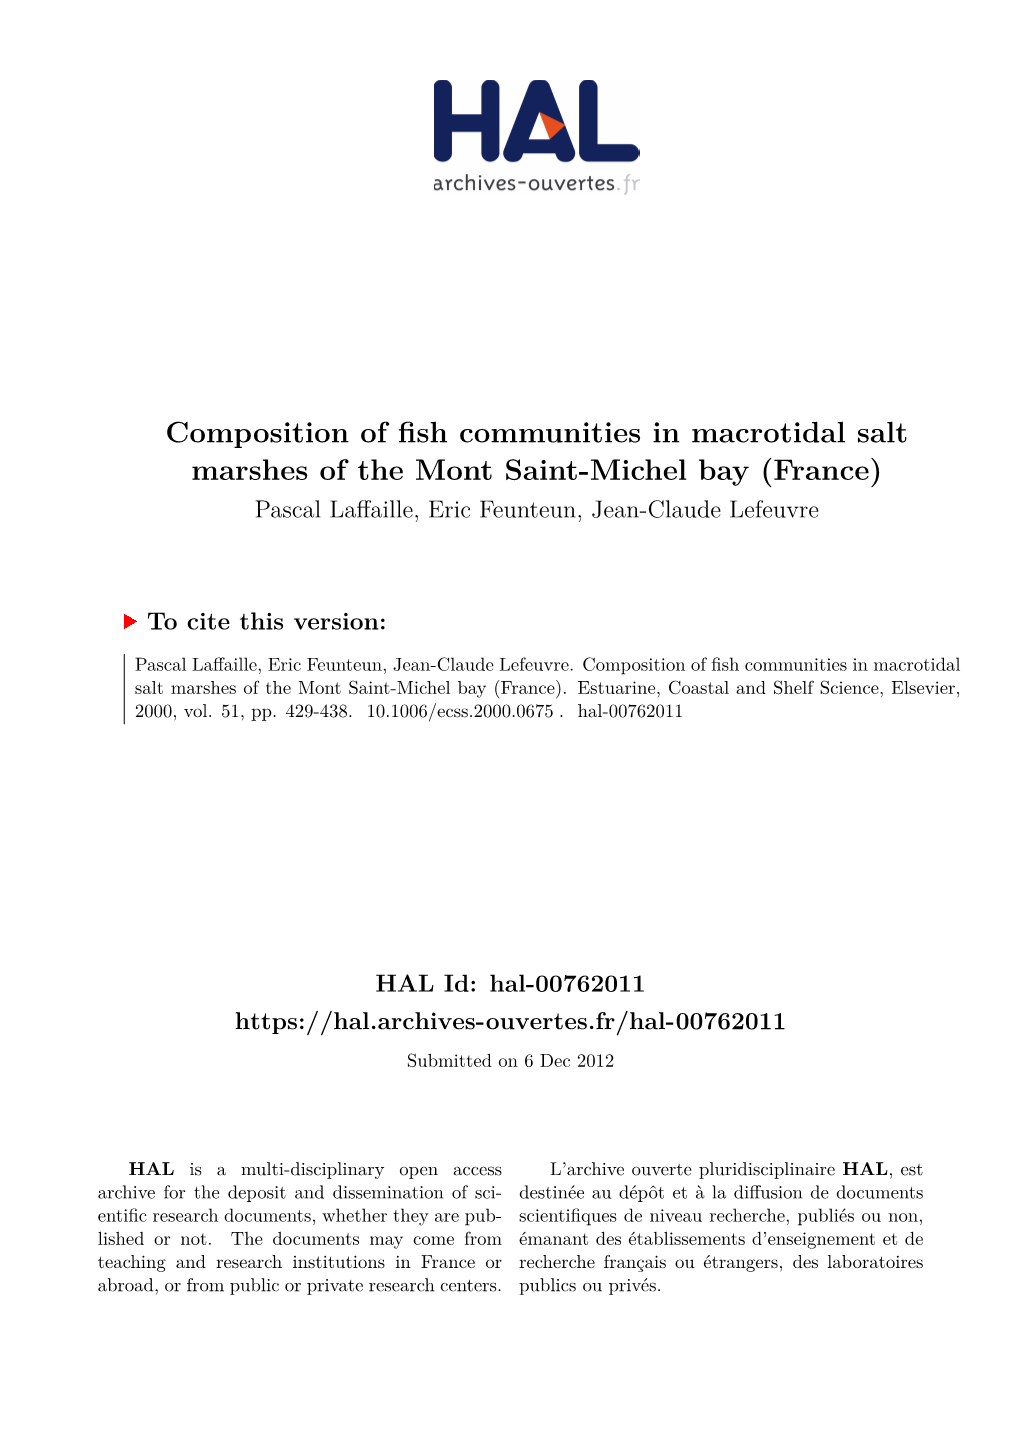 Composition of Fish Communities in Macrotidal Salt Marshes of the Mont Saint-Michel Bay (France) Pascal Laffaille, Eric Feunteun, Jean-Claude Lefeuvre